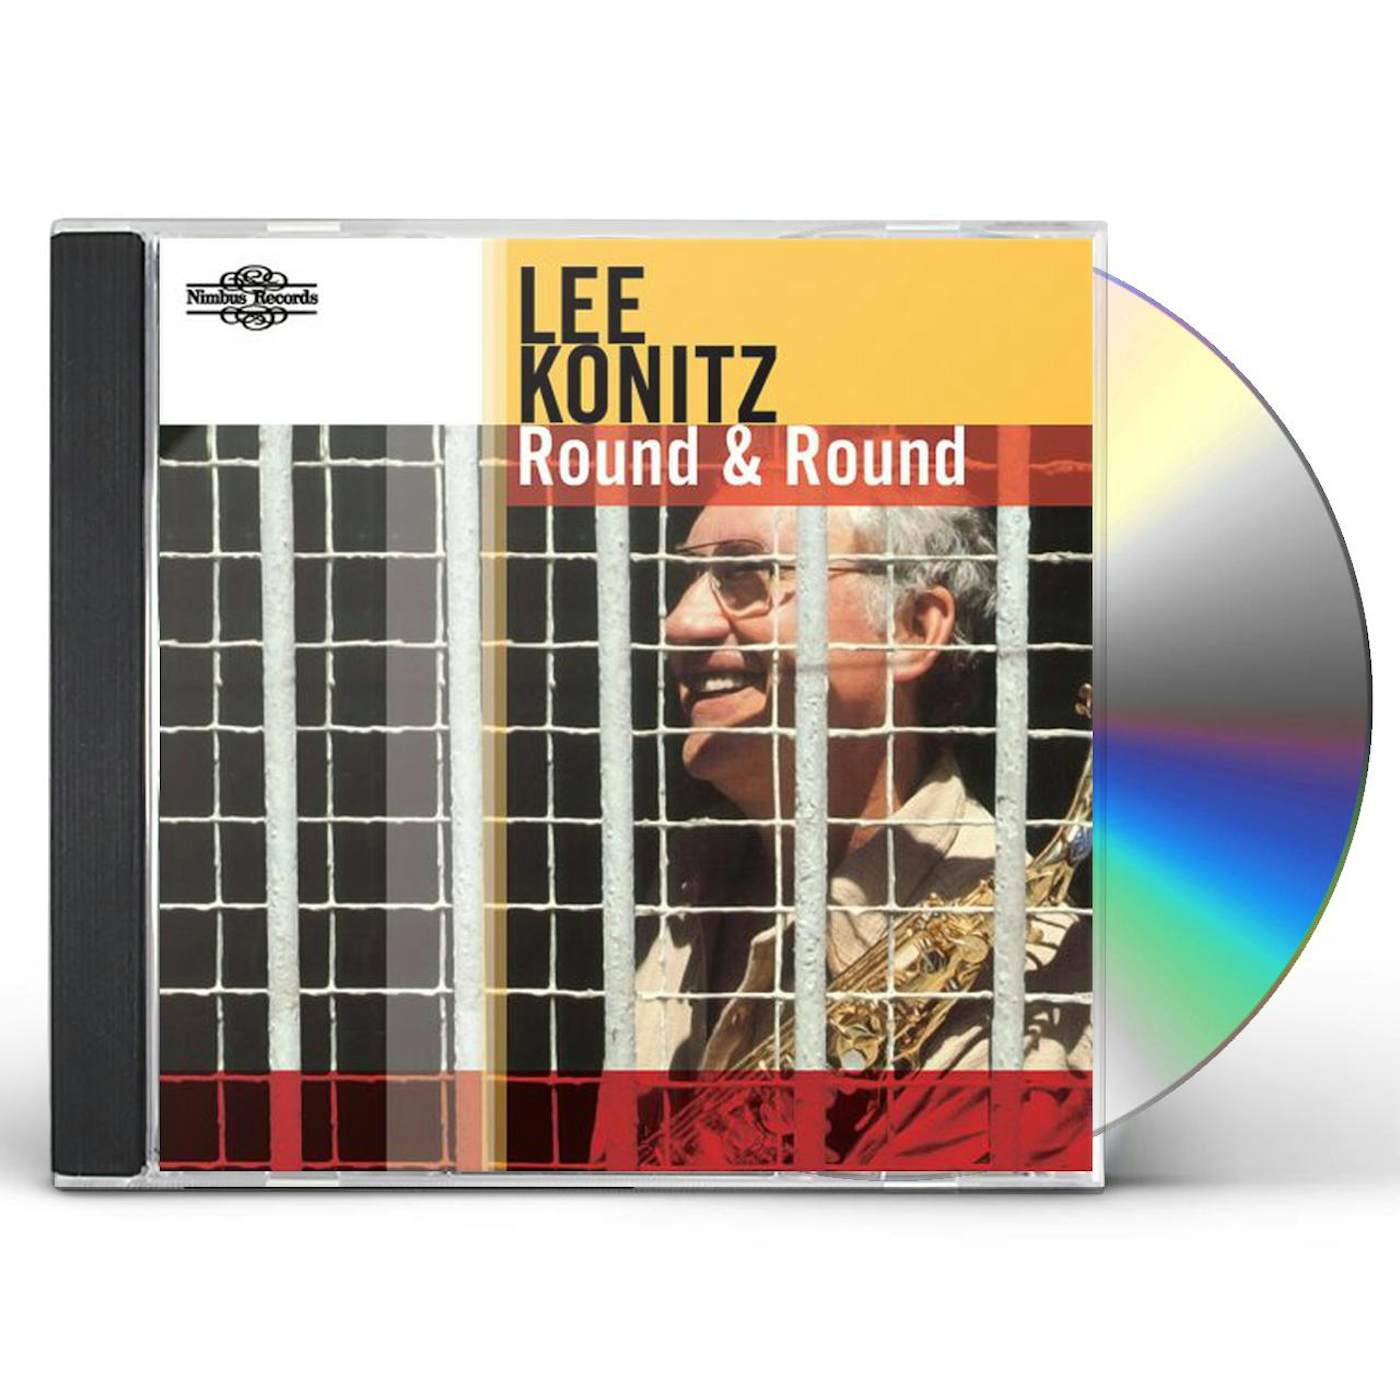 Lee Konitz ROUND & ROUND CD